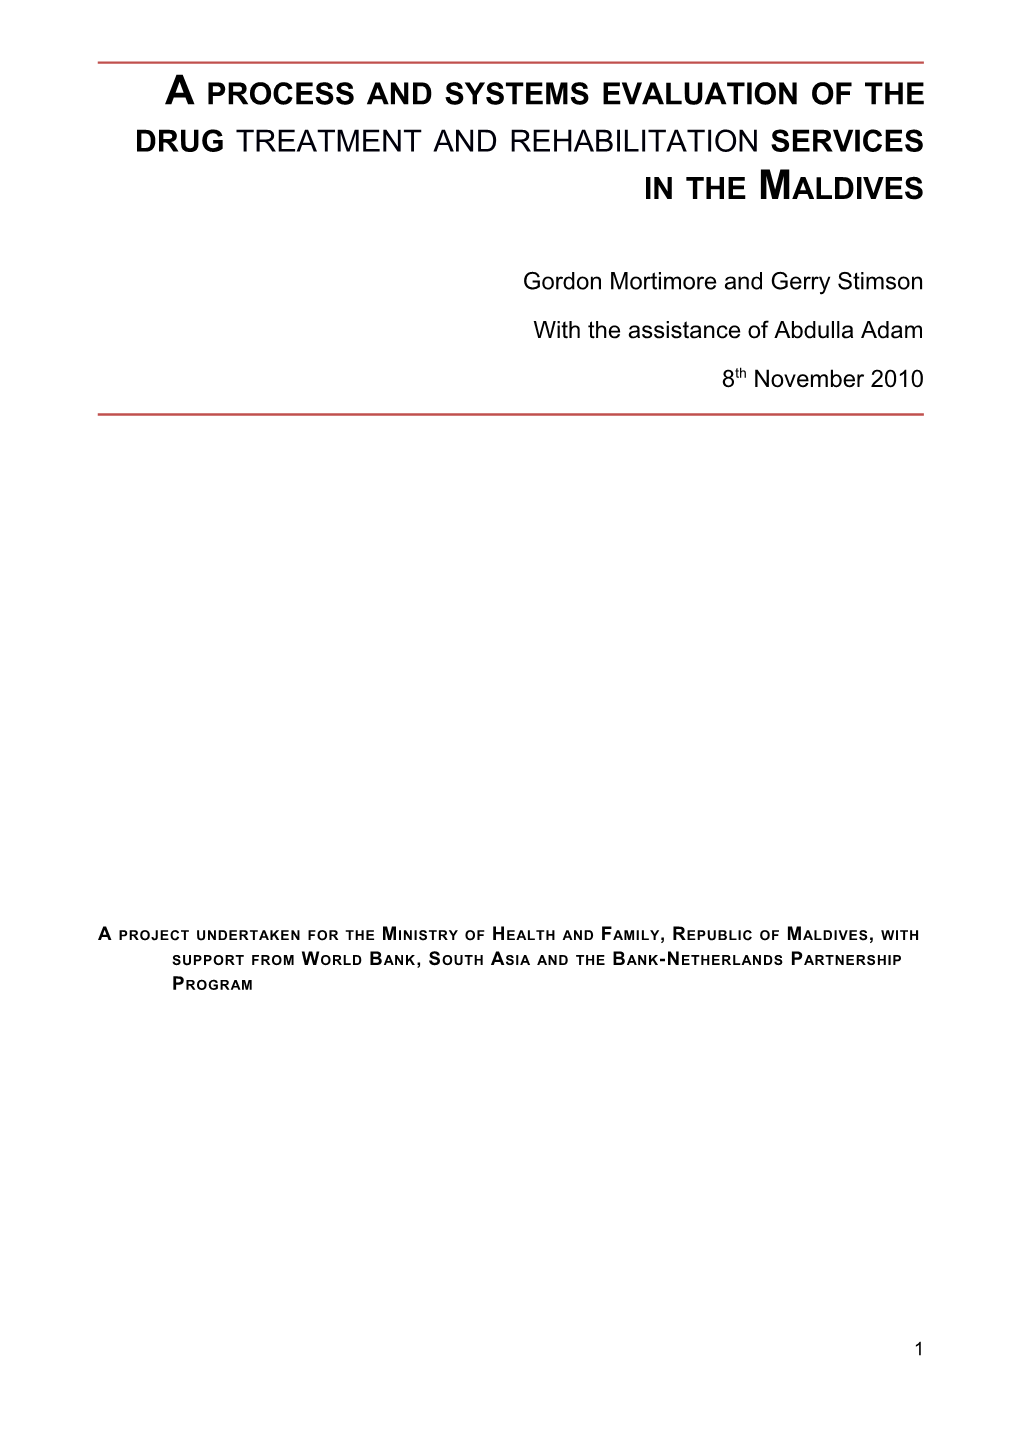 Gordon Mortimore and Gerry Stimson